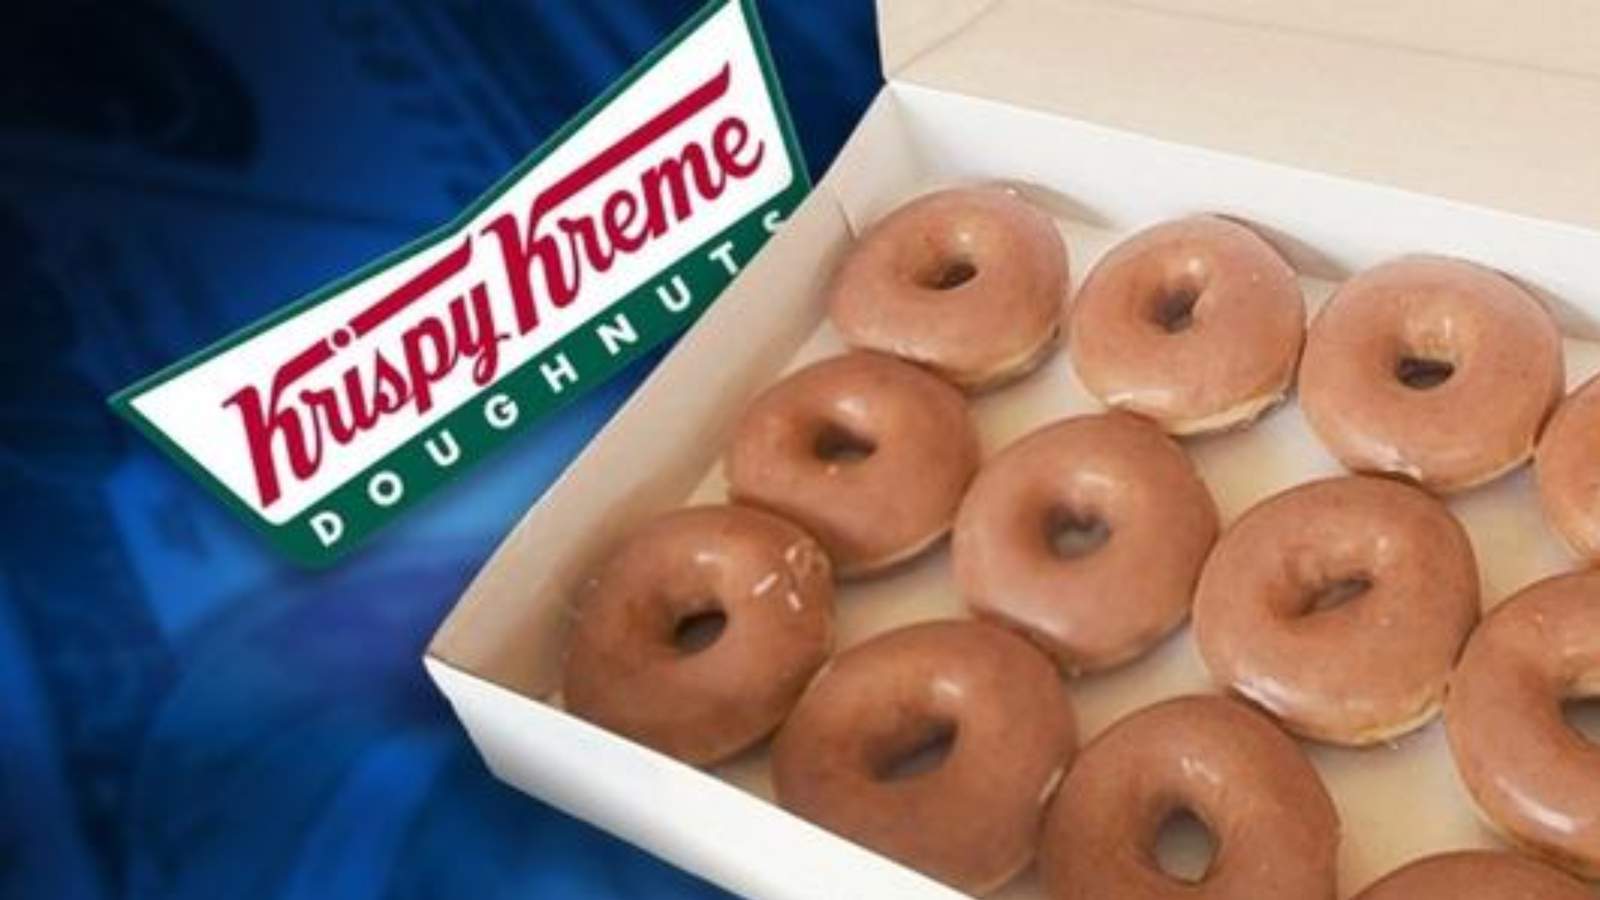 Teachers can get free donuts and coffee at Krispy Kreme next week